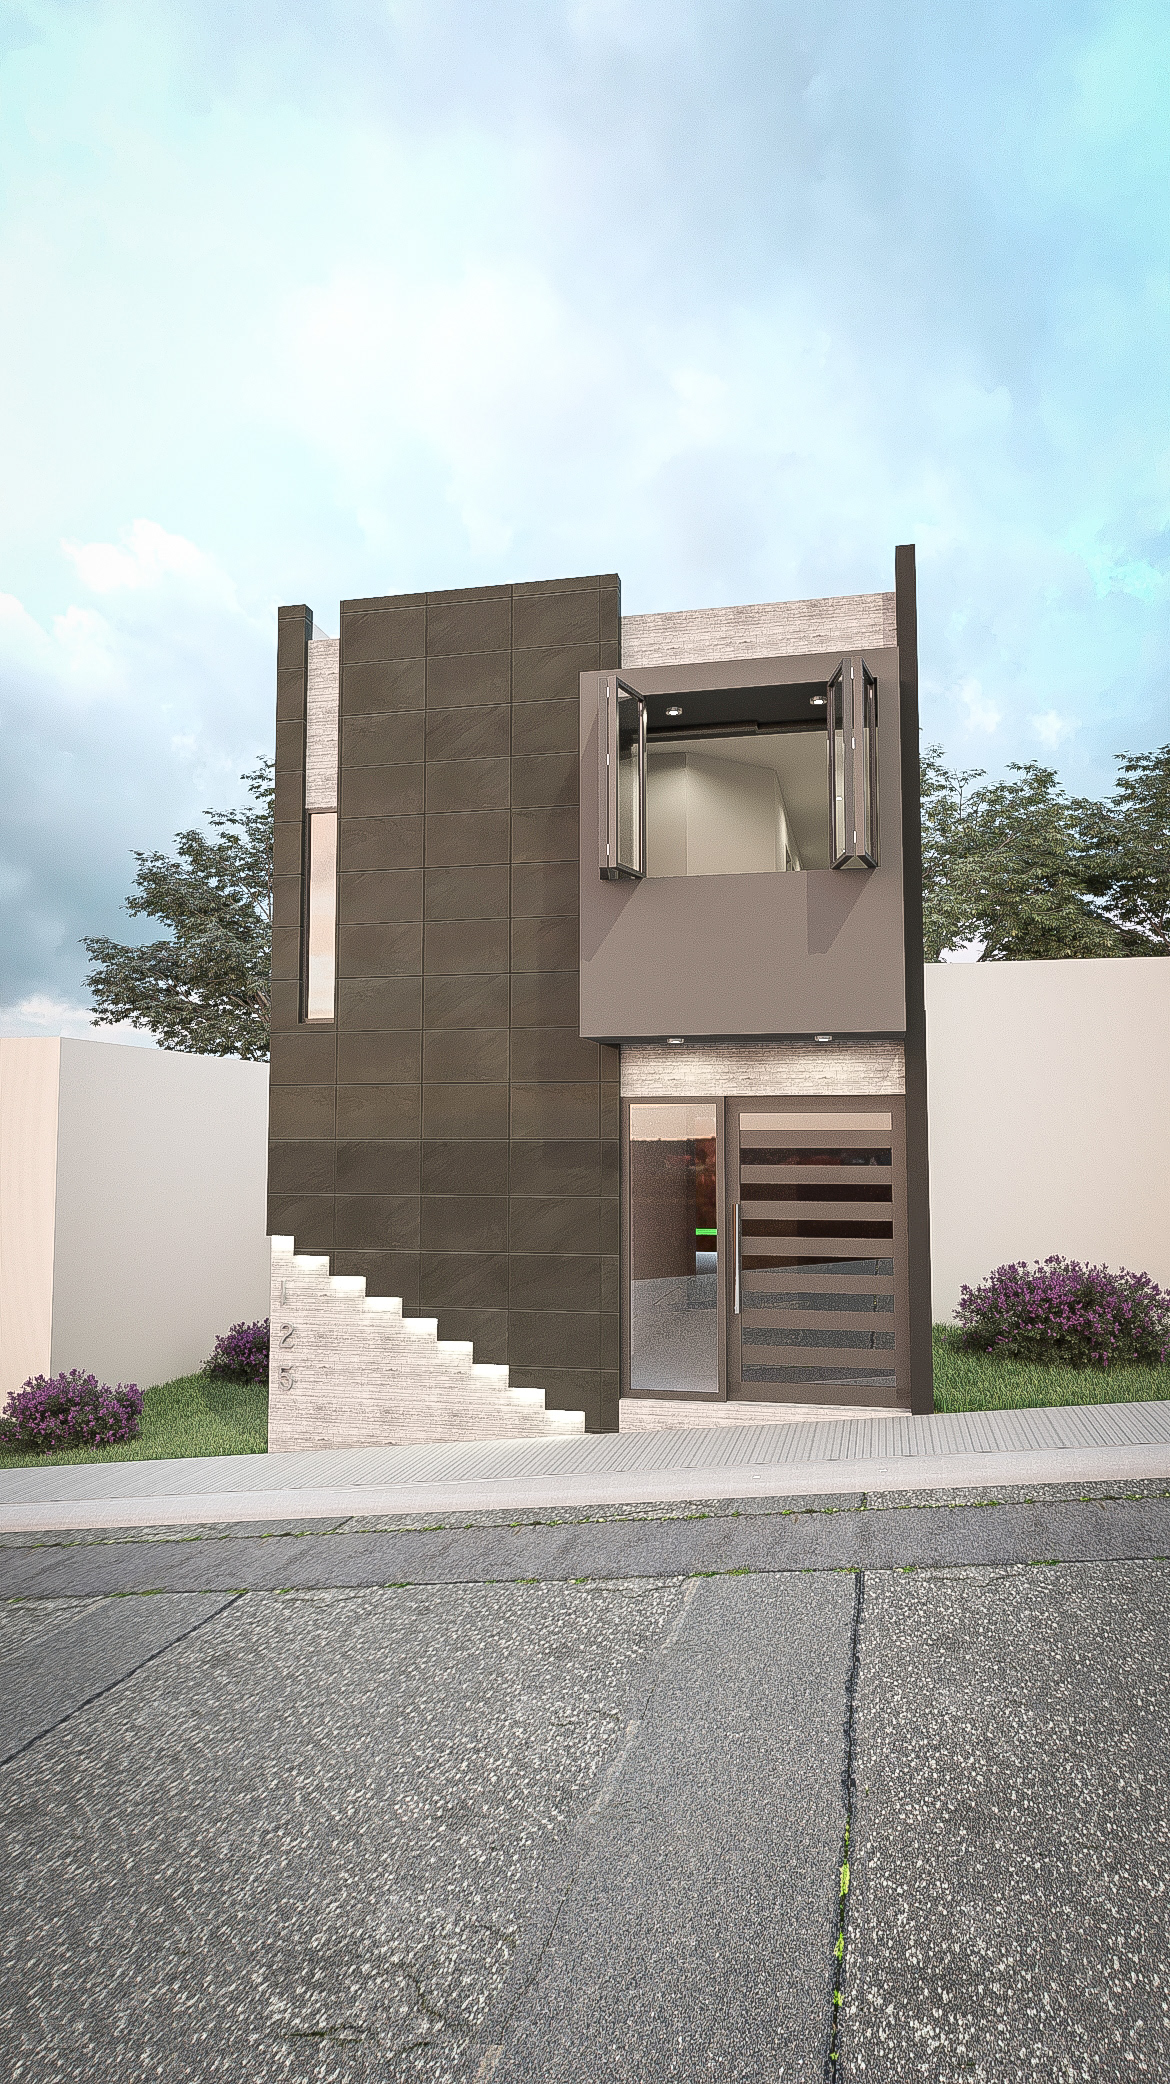 design arquitectura architecture 3D modern visualization Render